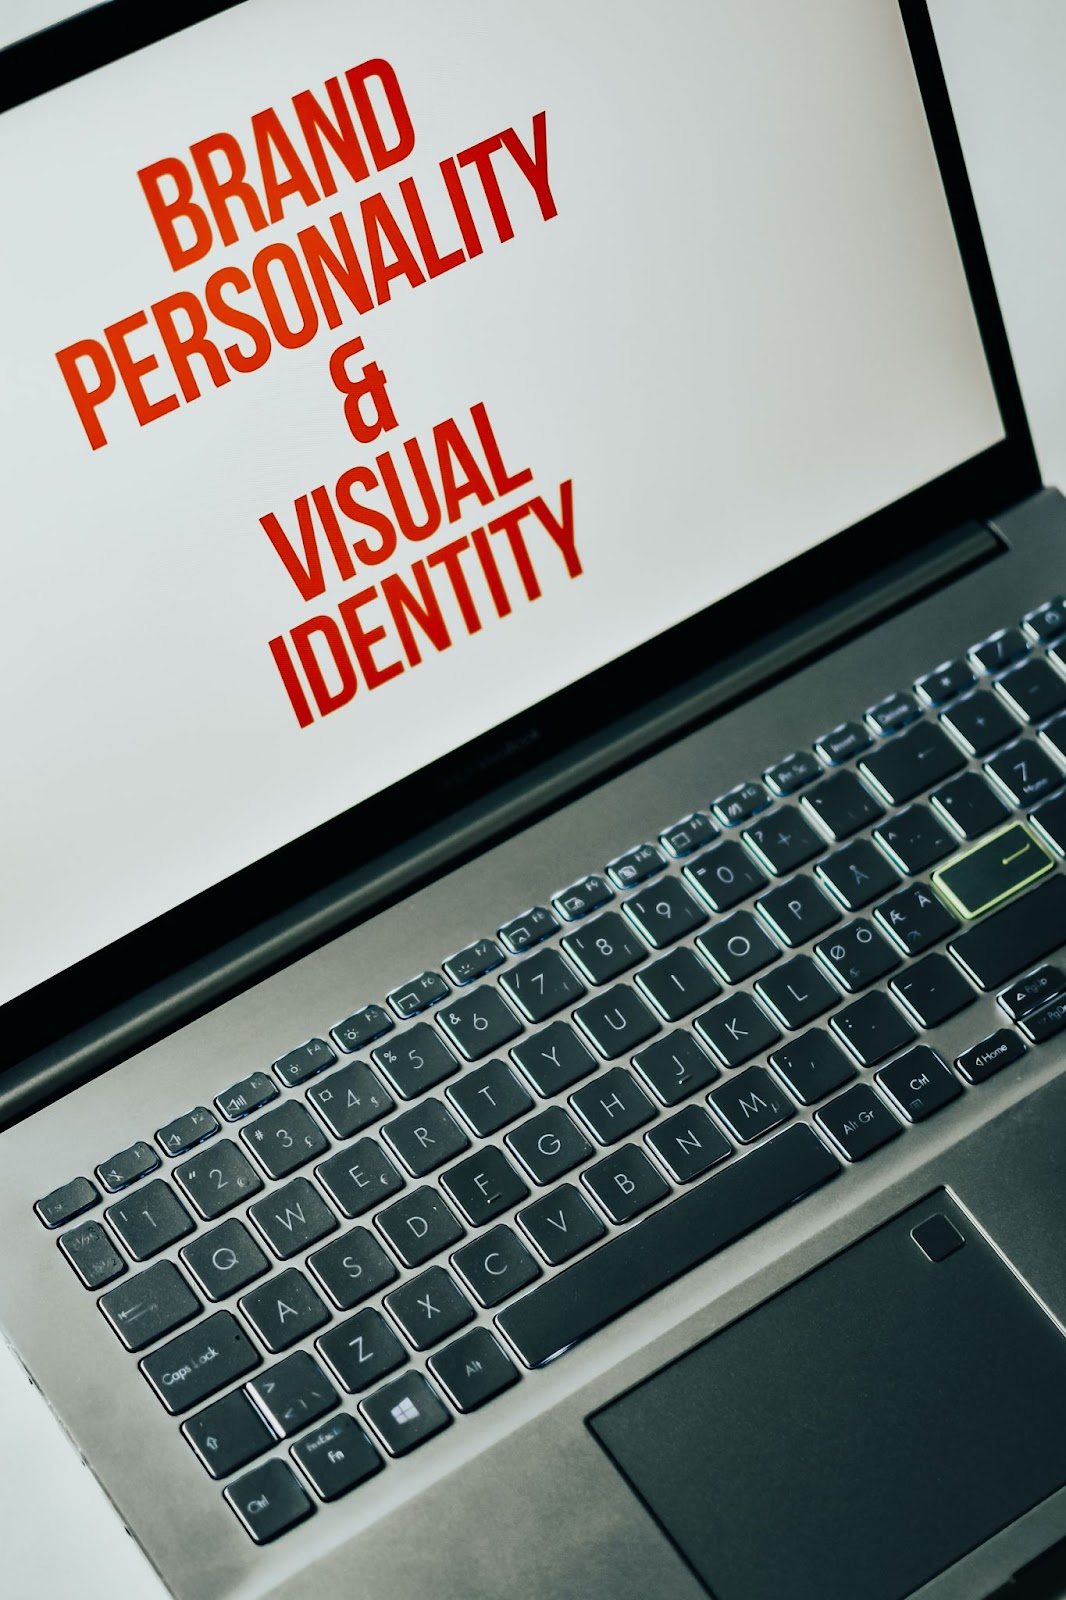 Laptop screen “Brand personality & visual identity.